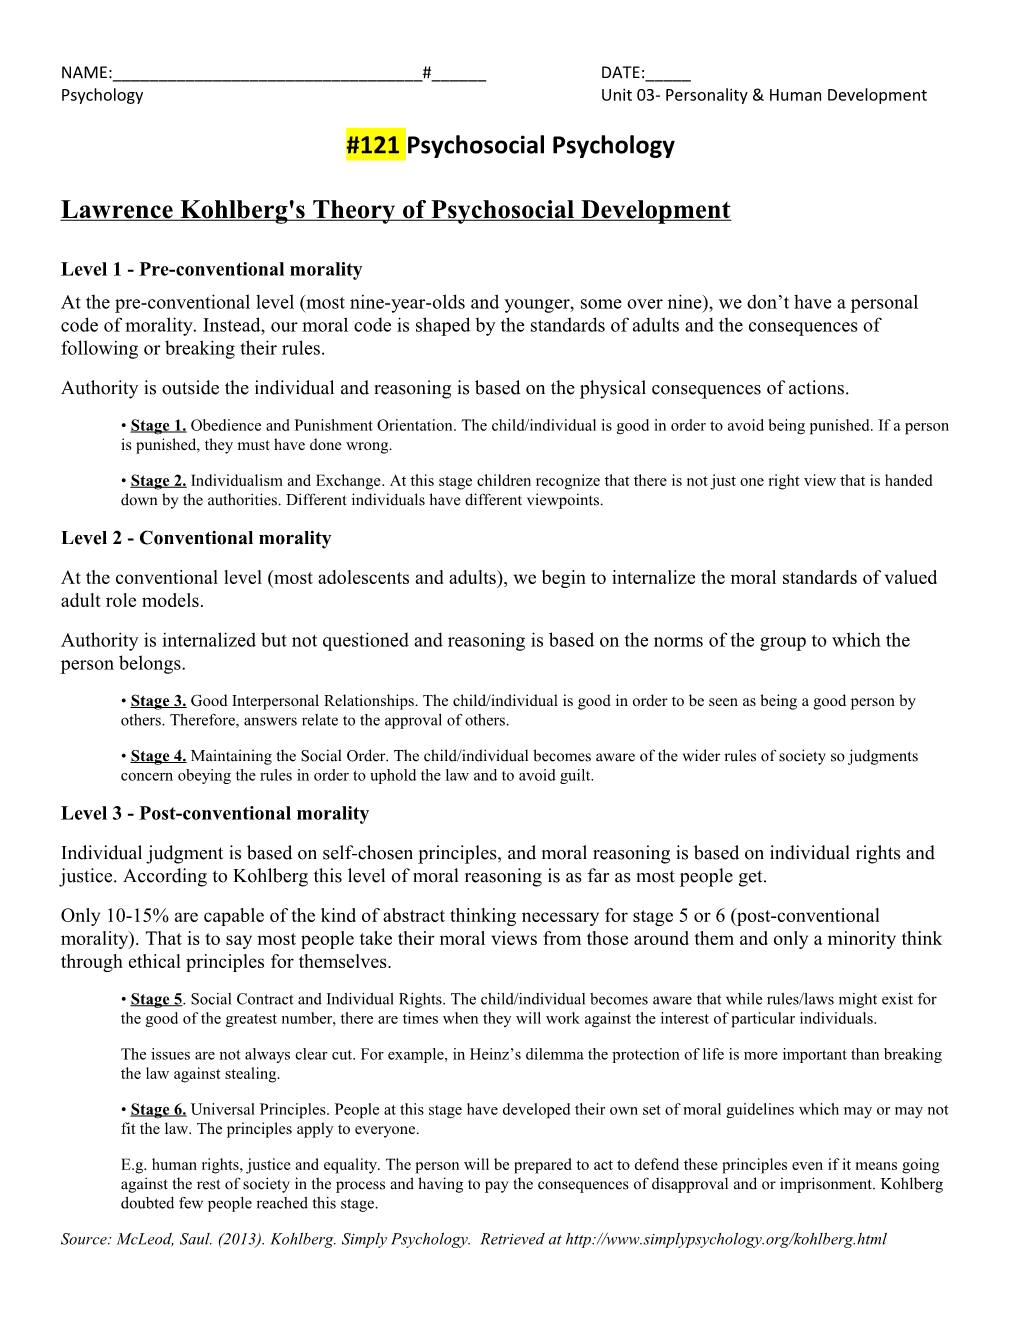 Lawrence Kohlberg's Theory of Psychosocial Development